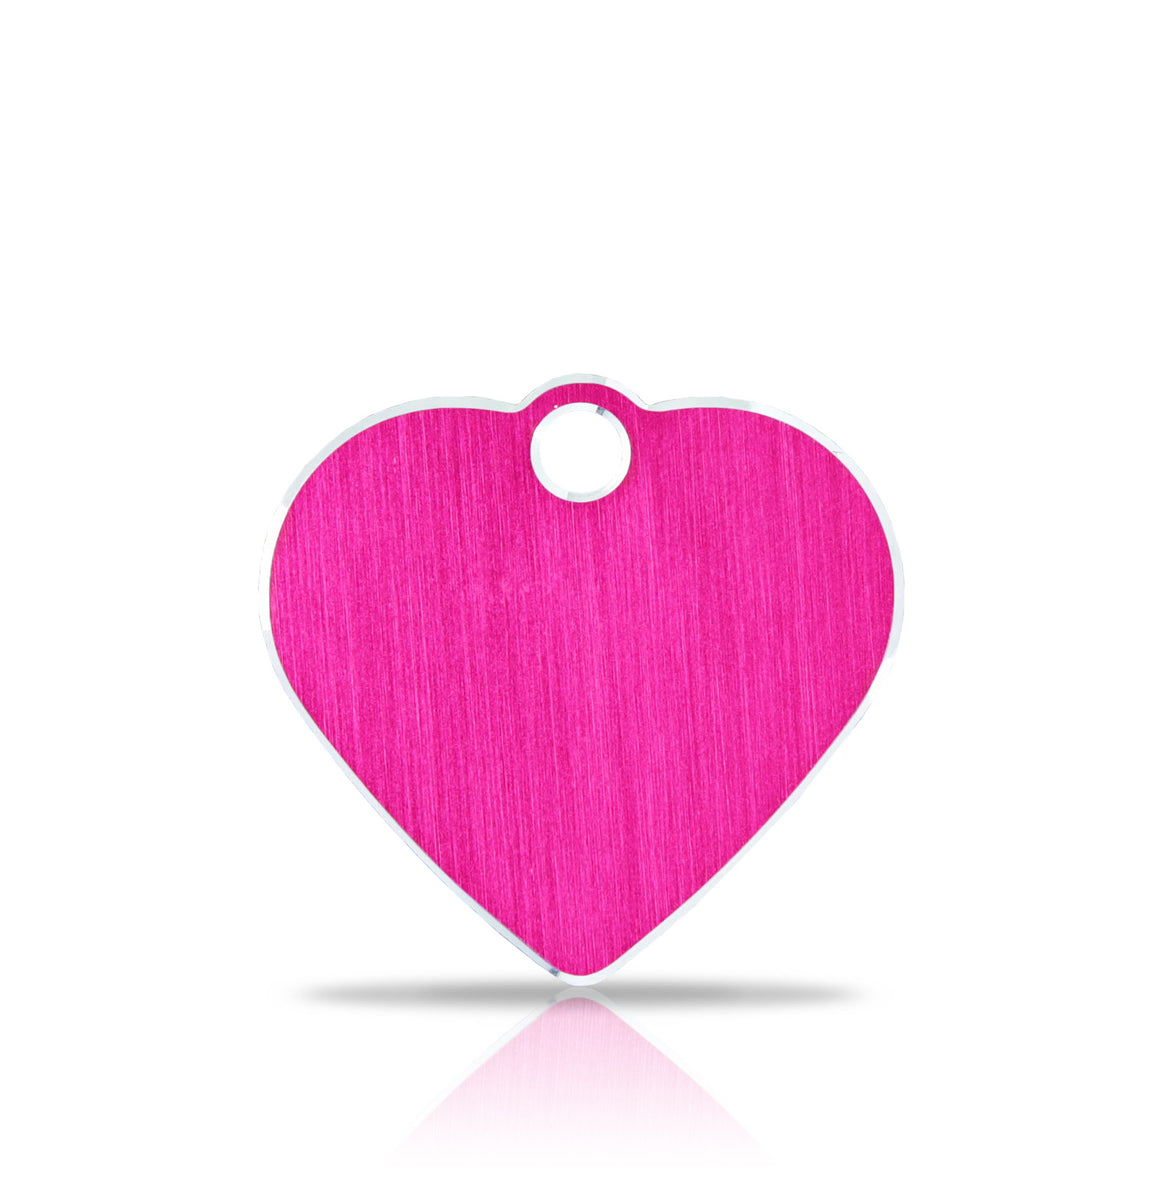 TaggIT Hi-Line Small Heart Pink iMarc Pet Tag